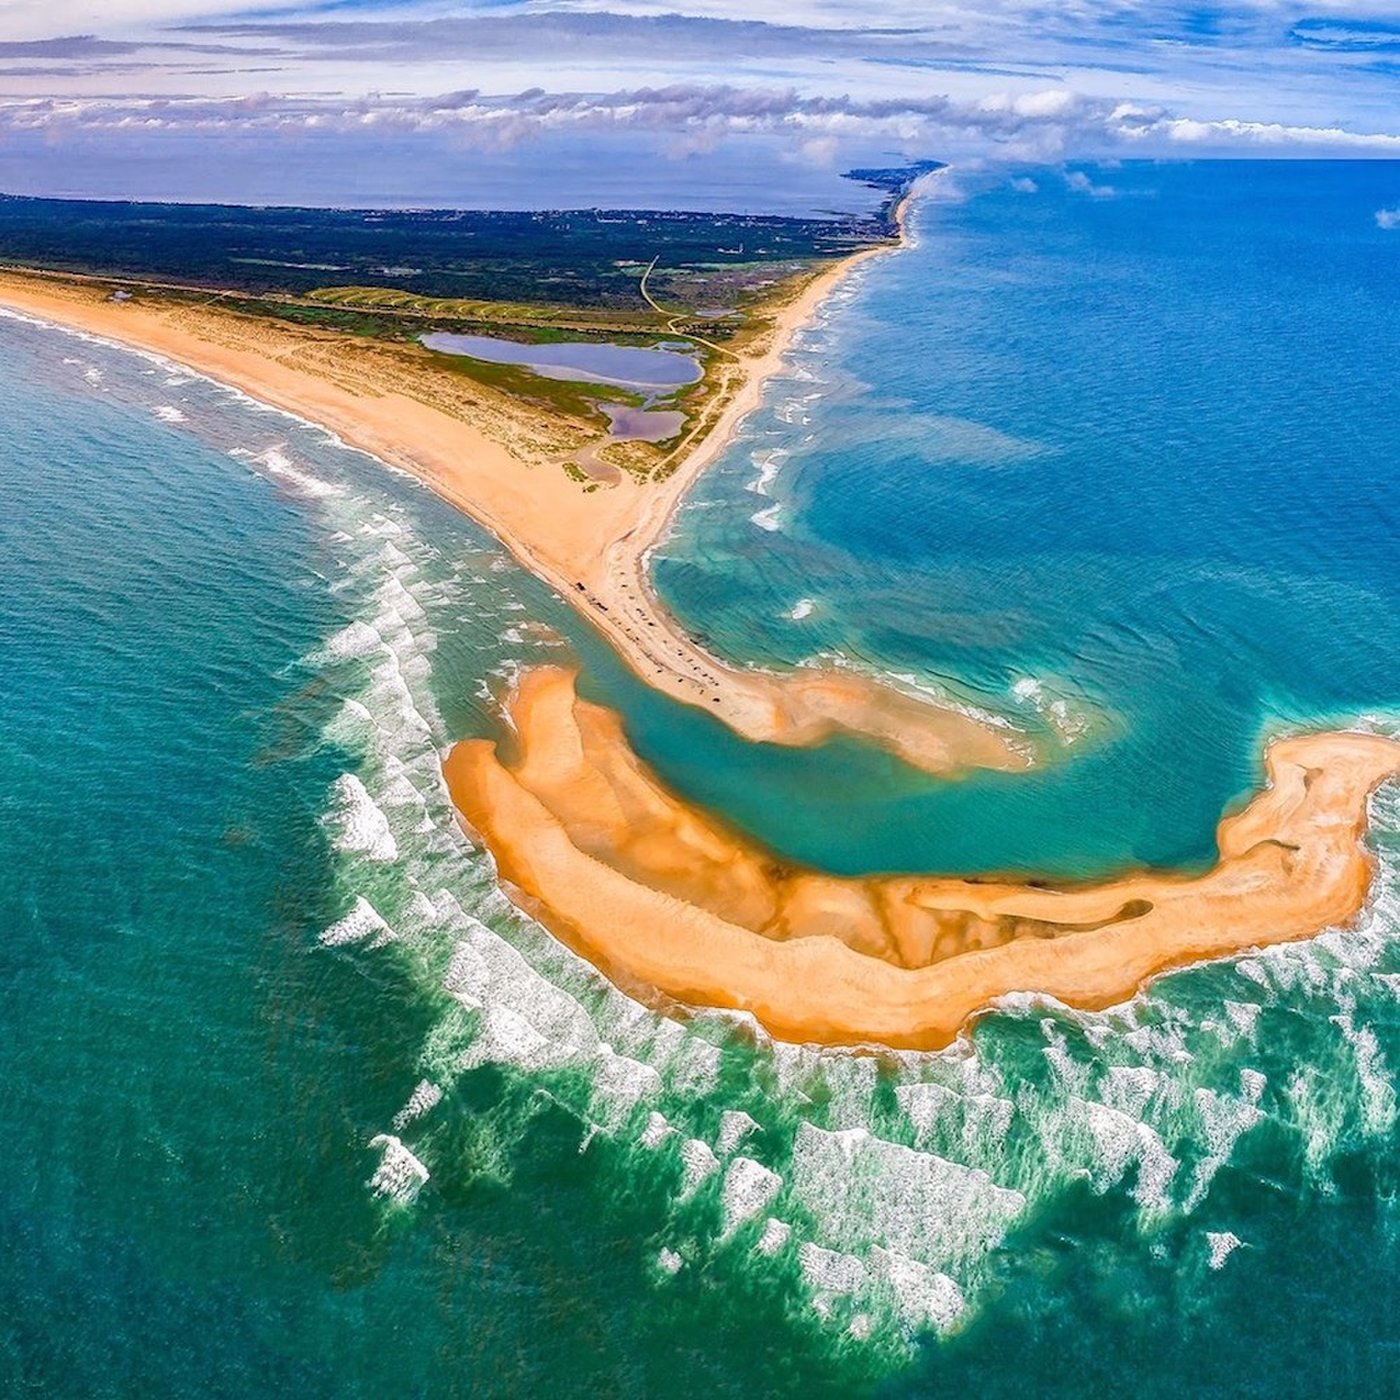 New island pops up off the coast of North Carolina